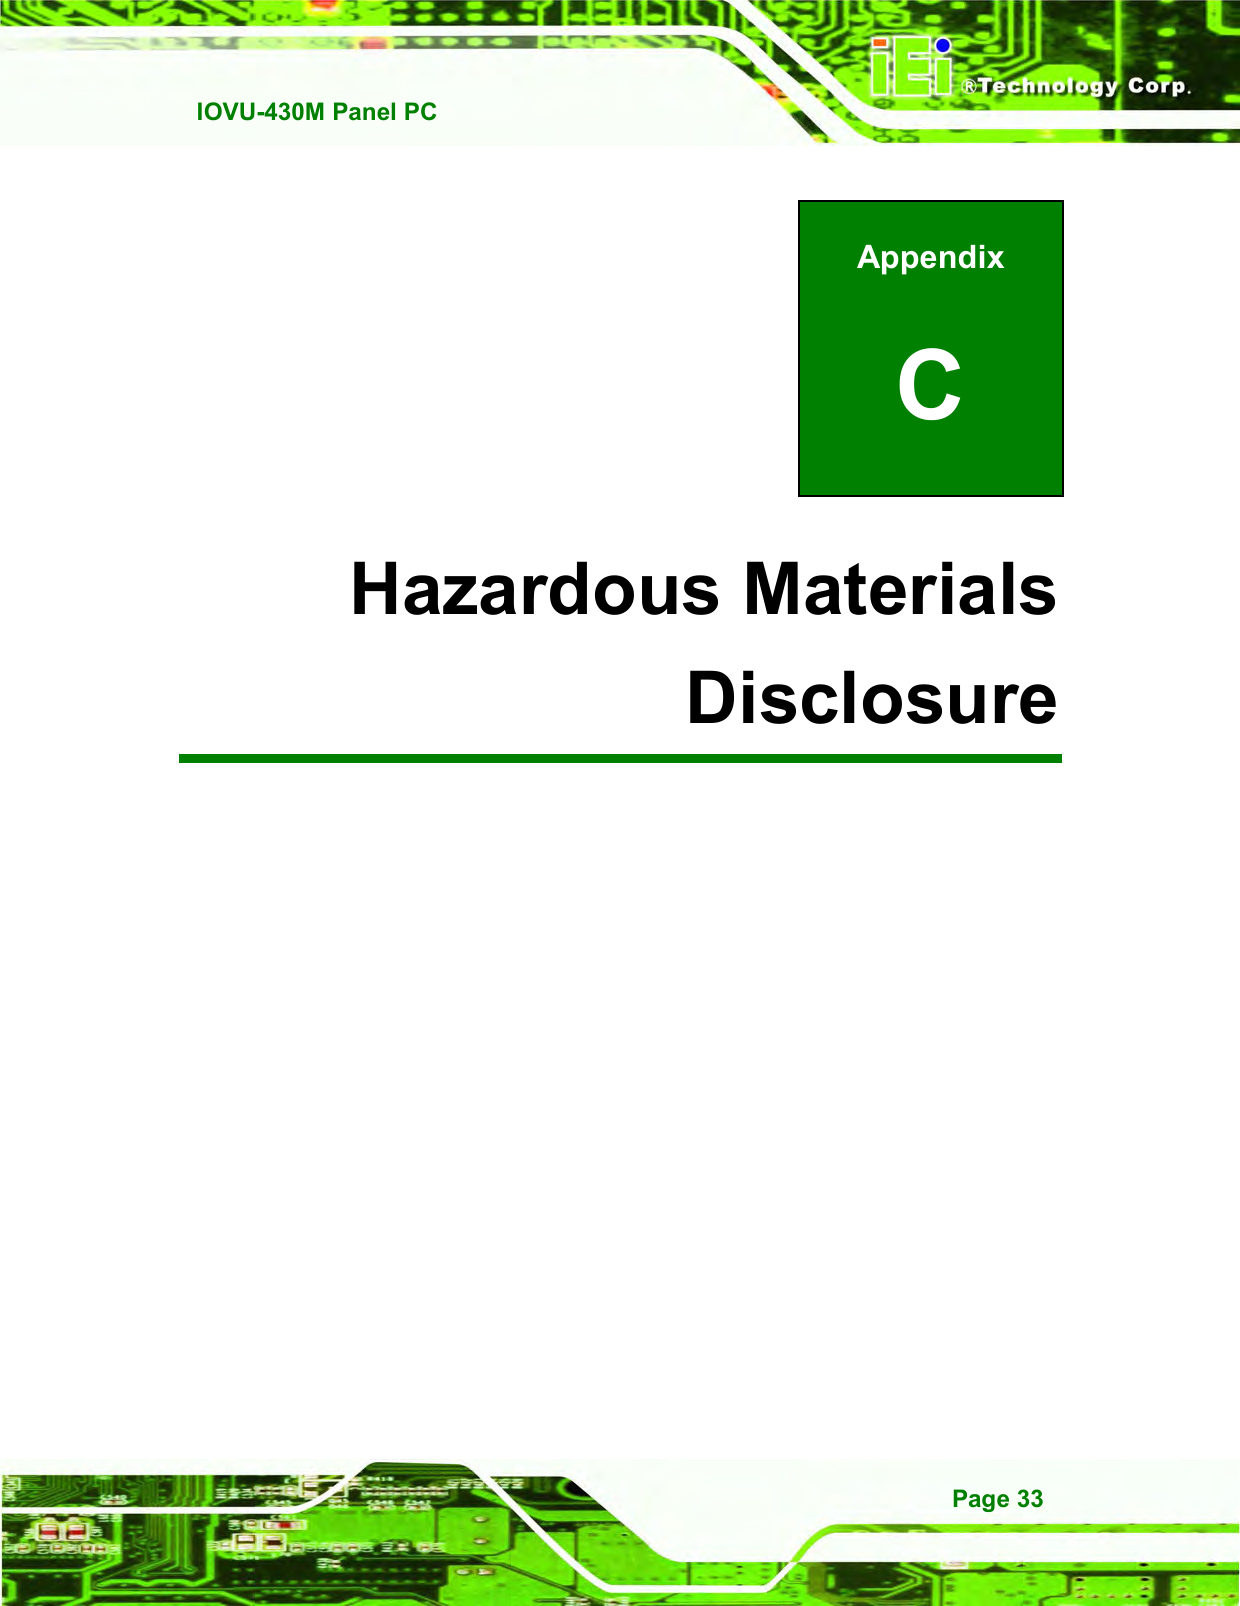   IOVU-430M Panel PC Page 33 Appendix C C Hazardous Materials Disclosure 